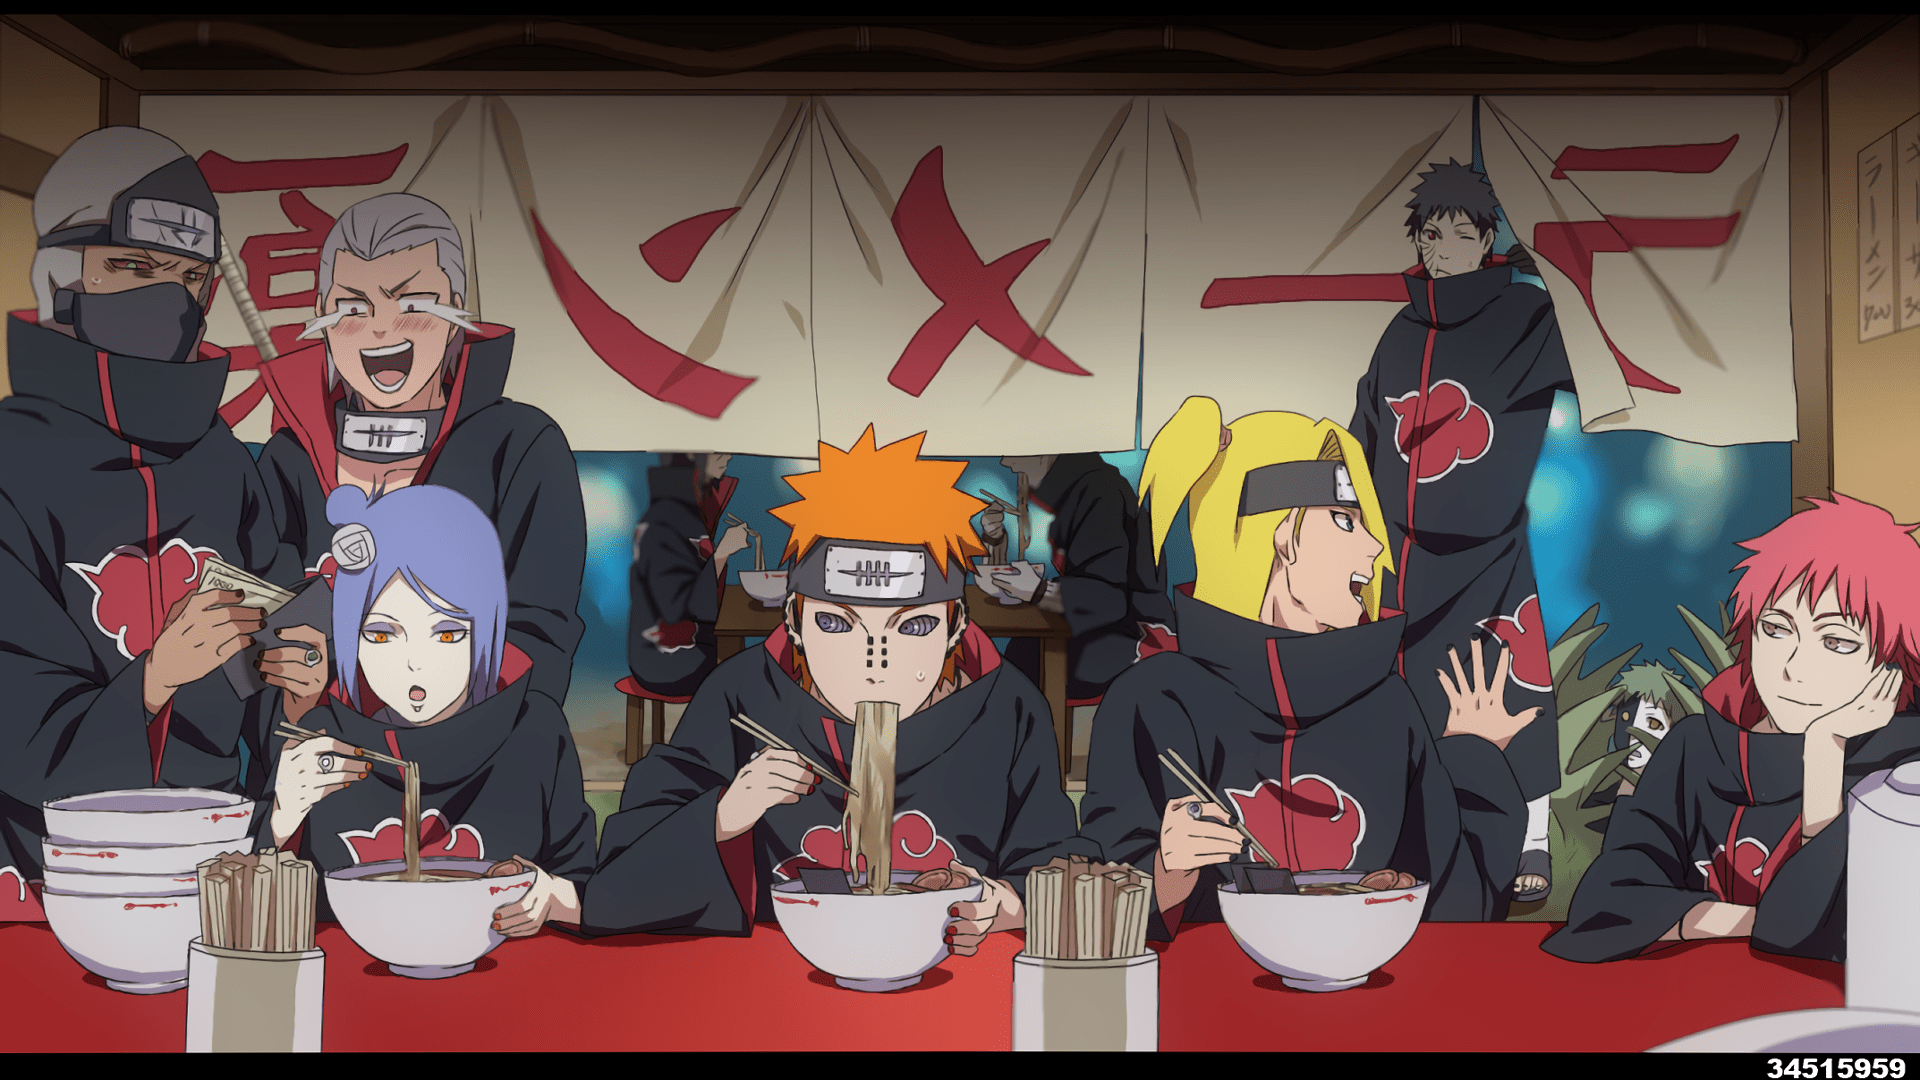 Naruto characters sitting around a table with food and chopsticks - Obito Uchiha, ramen, Naruto